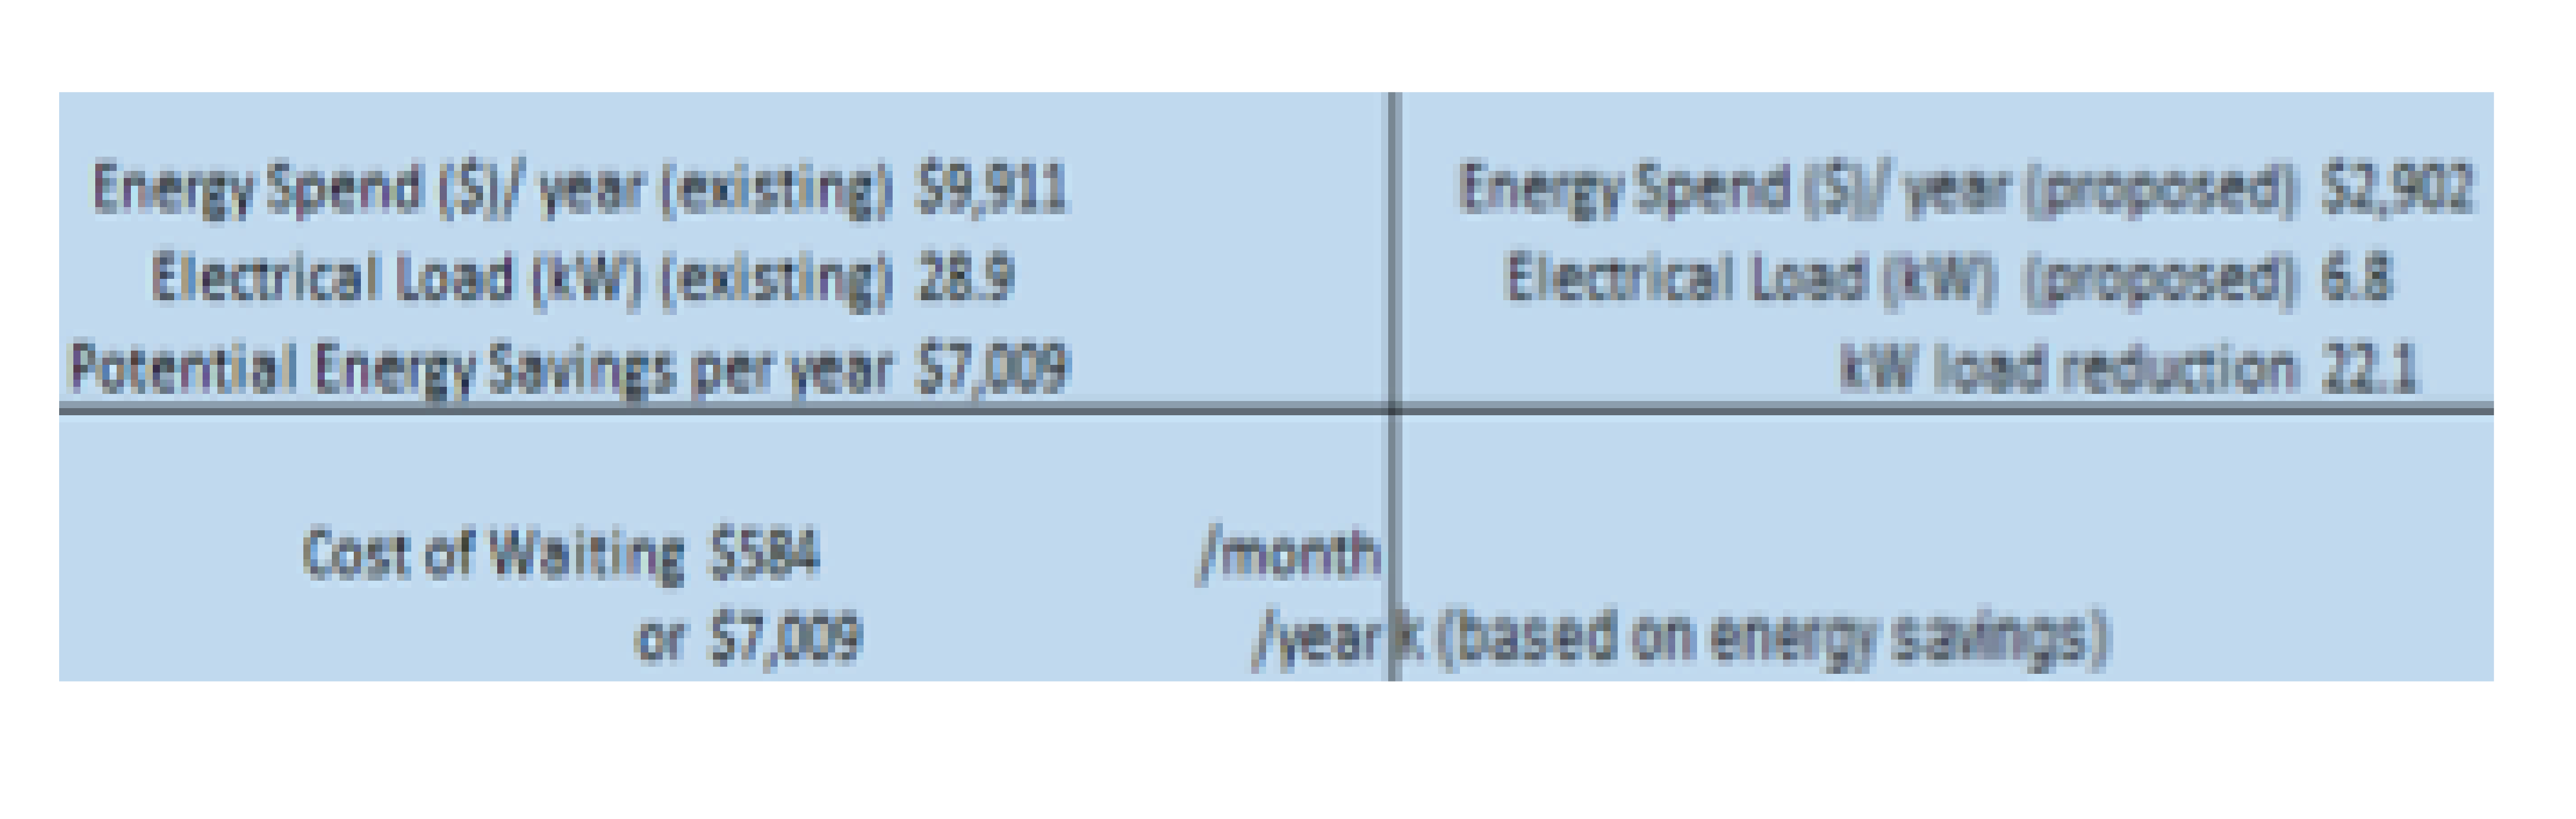 Scott Electric Edge Group Energy Estimates